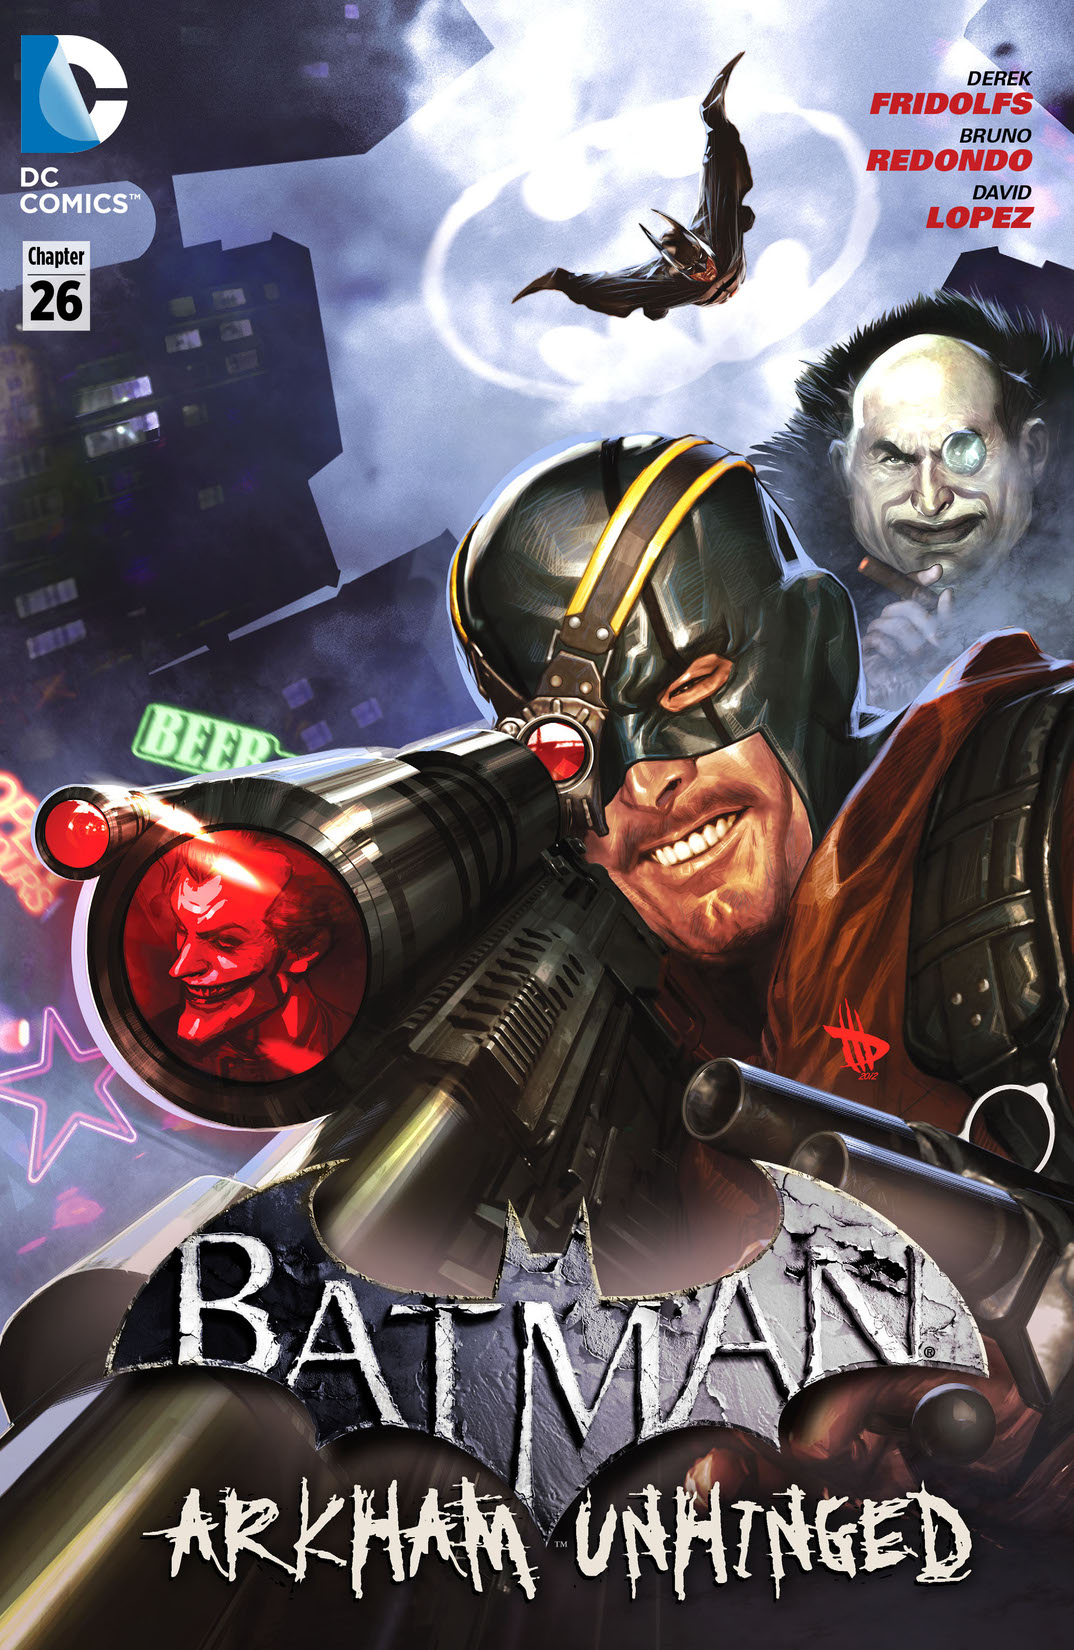 Batman: Arkham Unhinged #26 preview images